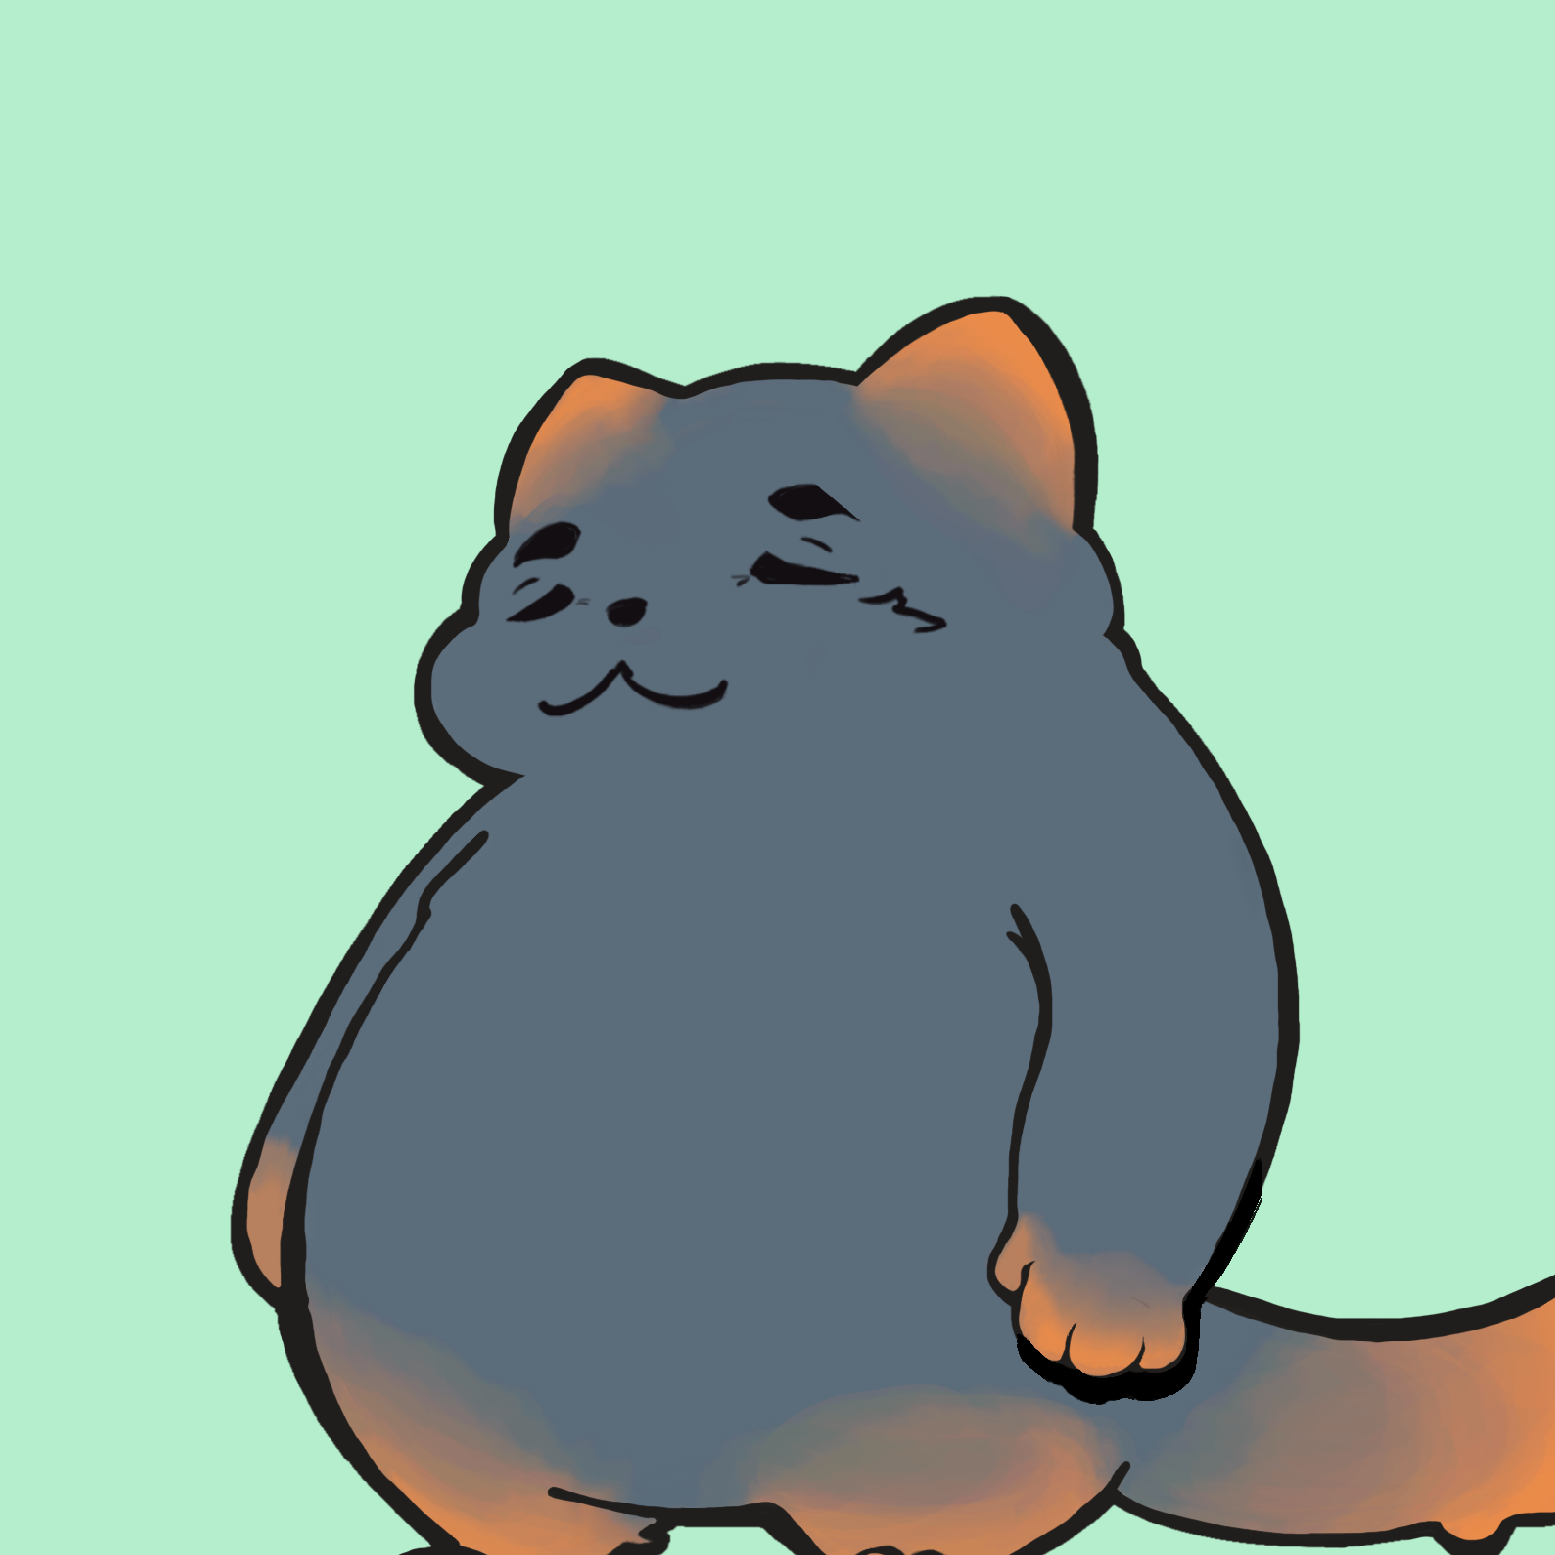 Degen Fat Cat the 4045th